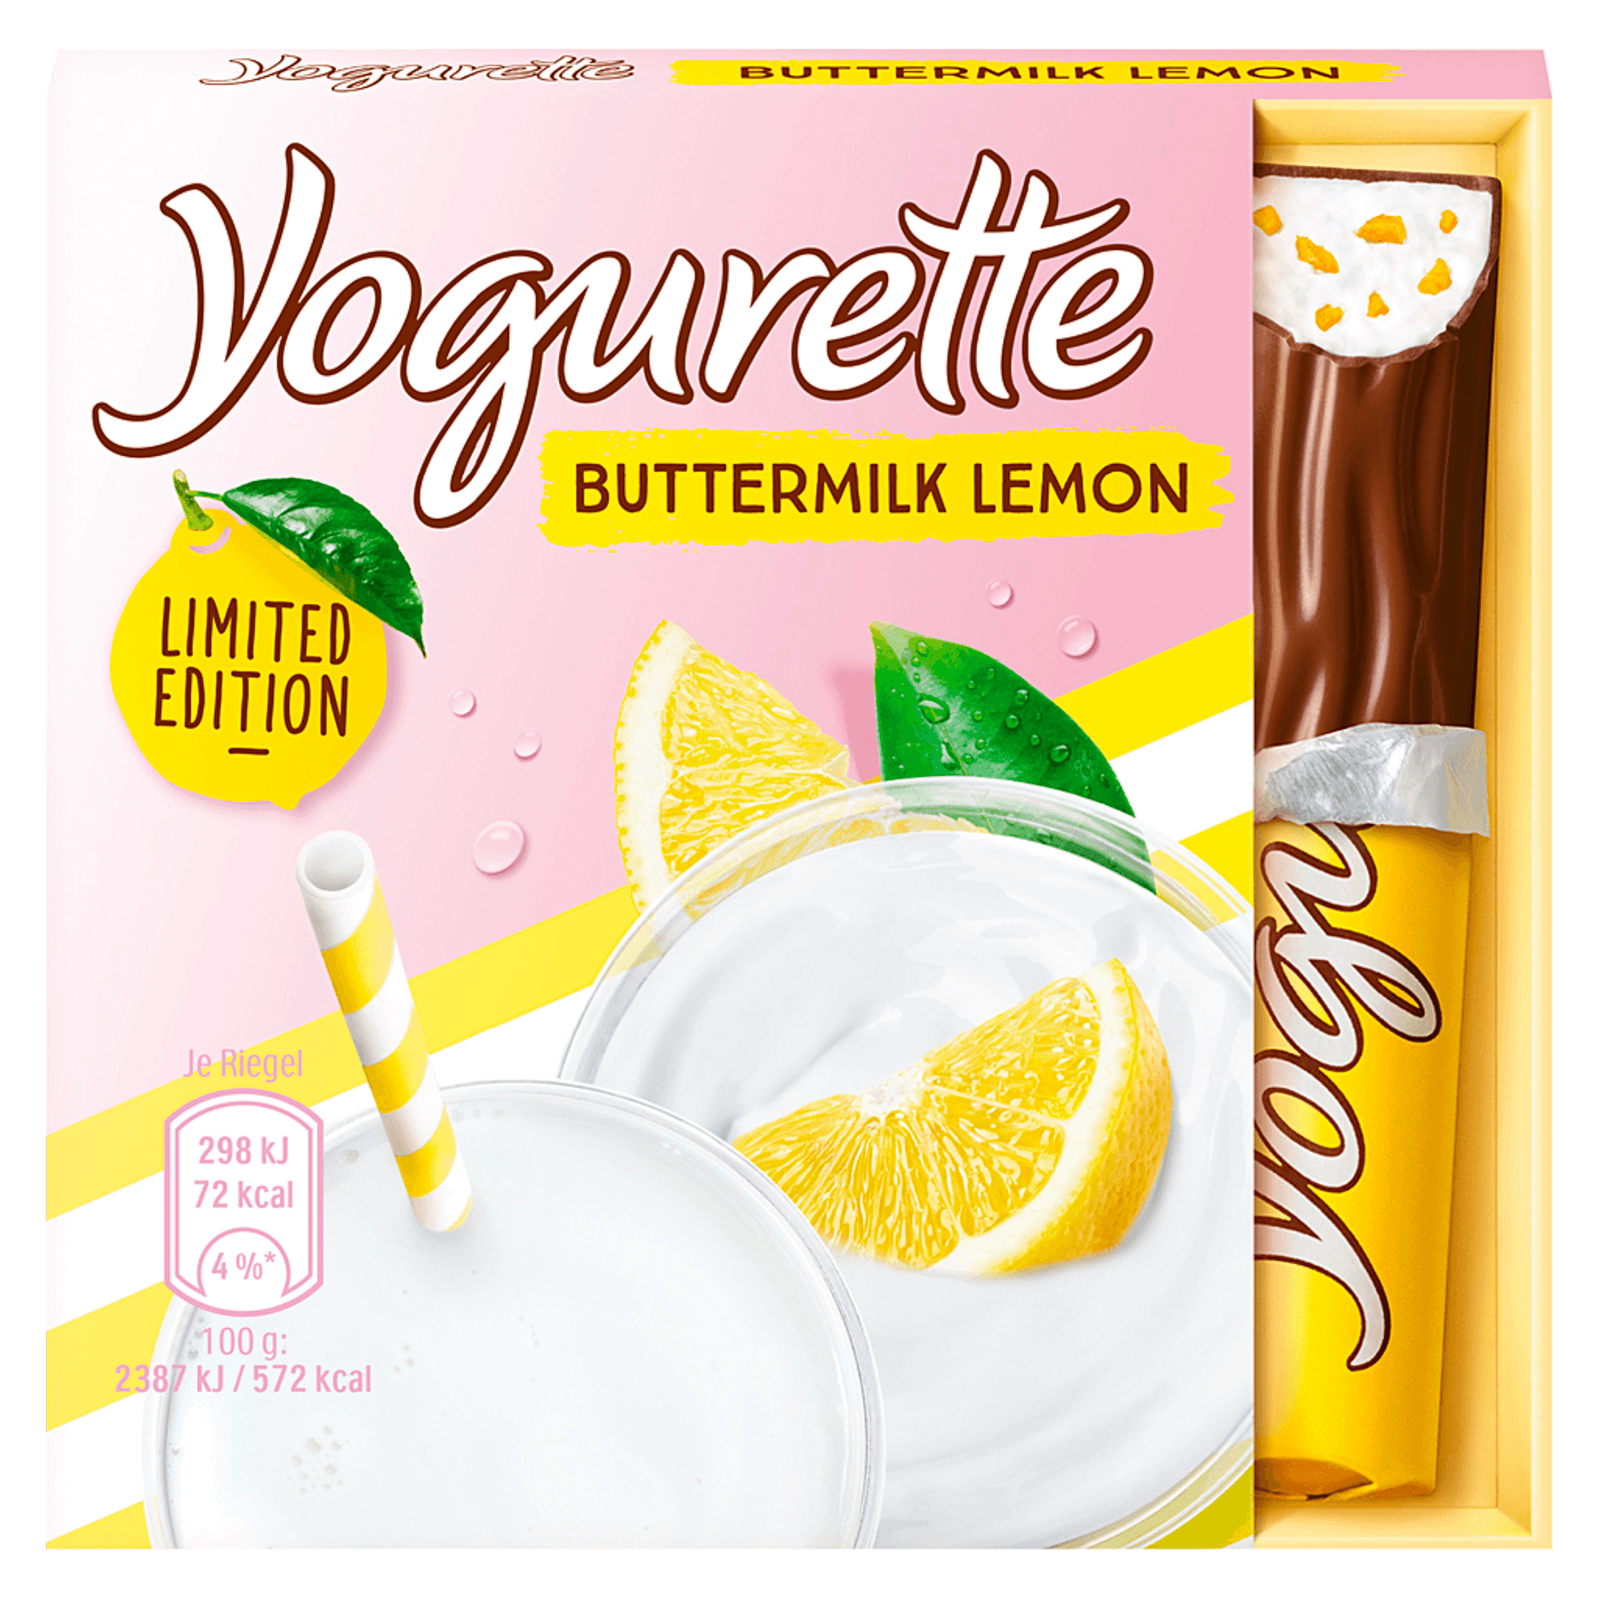 Yogurette Buttermilk Lemon bei bestellen! REWE 50g online